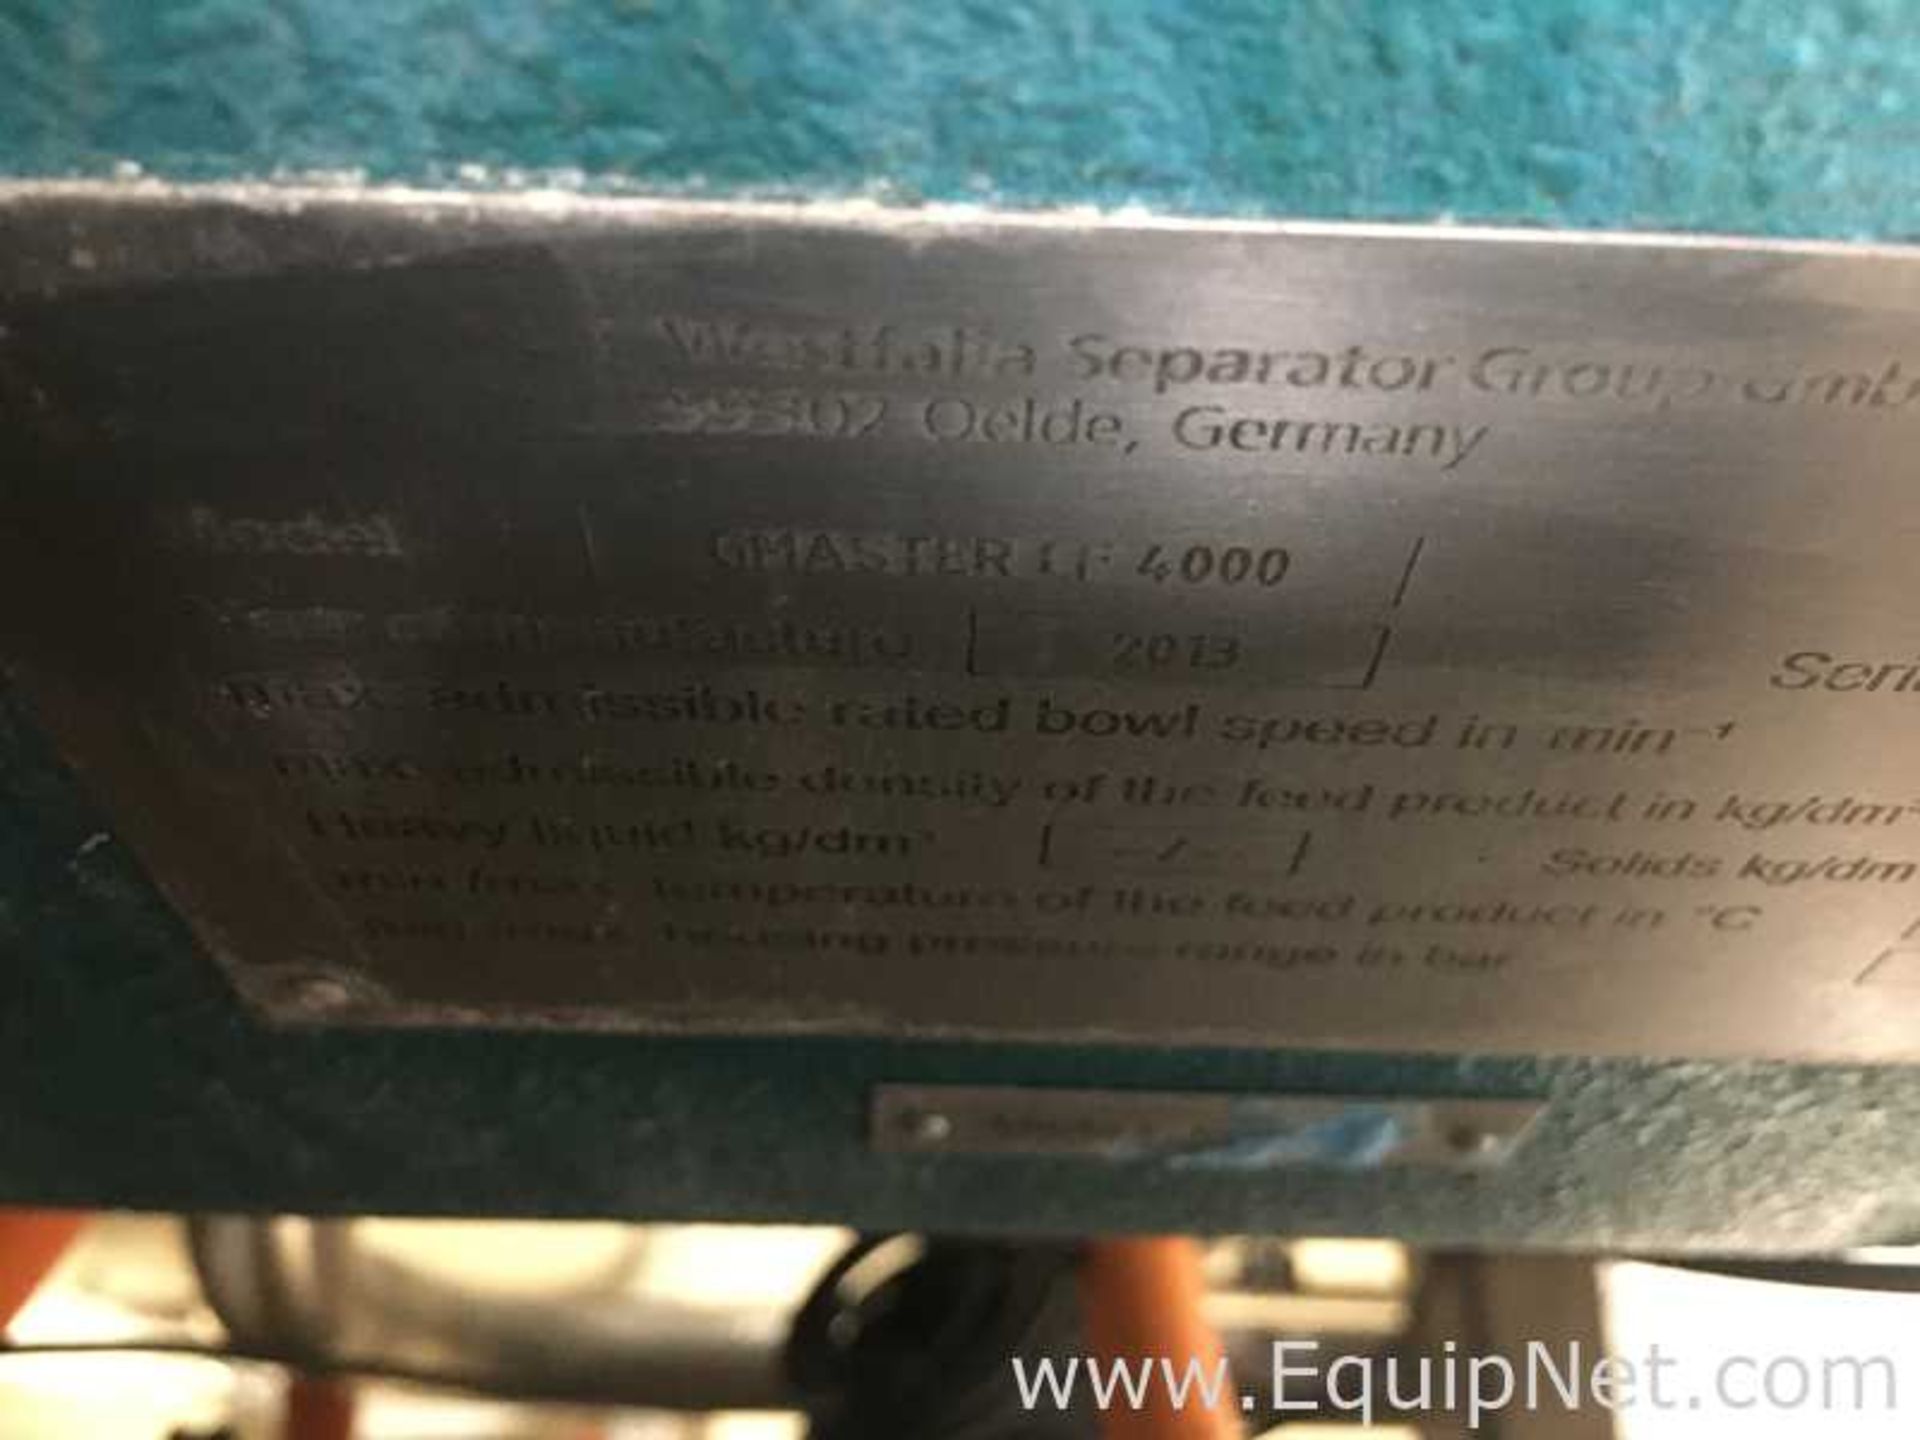 GEA Westfalia Separator Group GMASTER CF 4000 Stainless Steel Decanter Centrifuge - Image 14 of 35